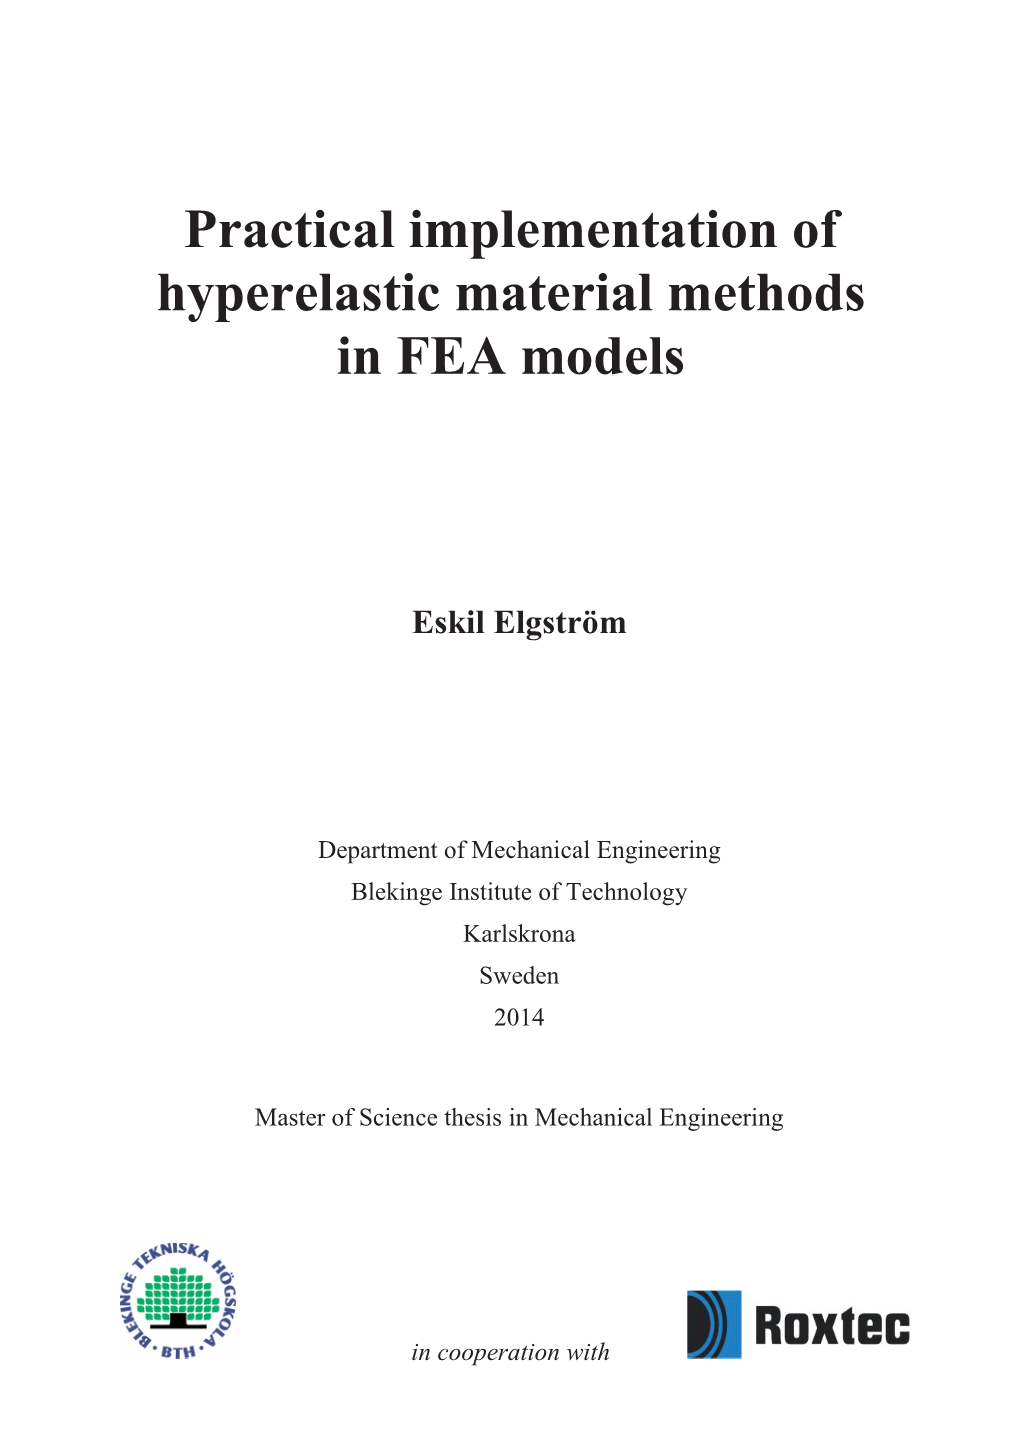 Practical Implementation of Hyperelastic Material Methods in FEA Models